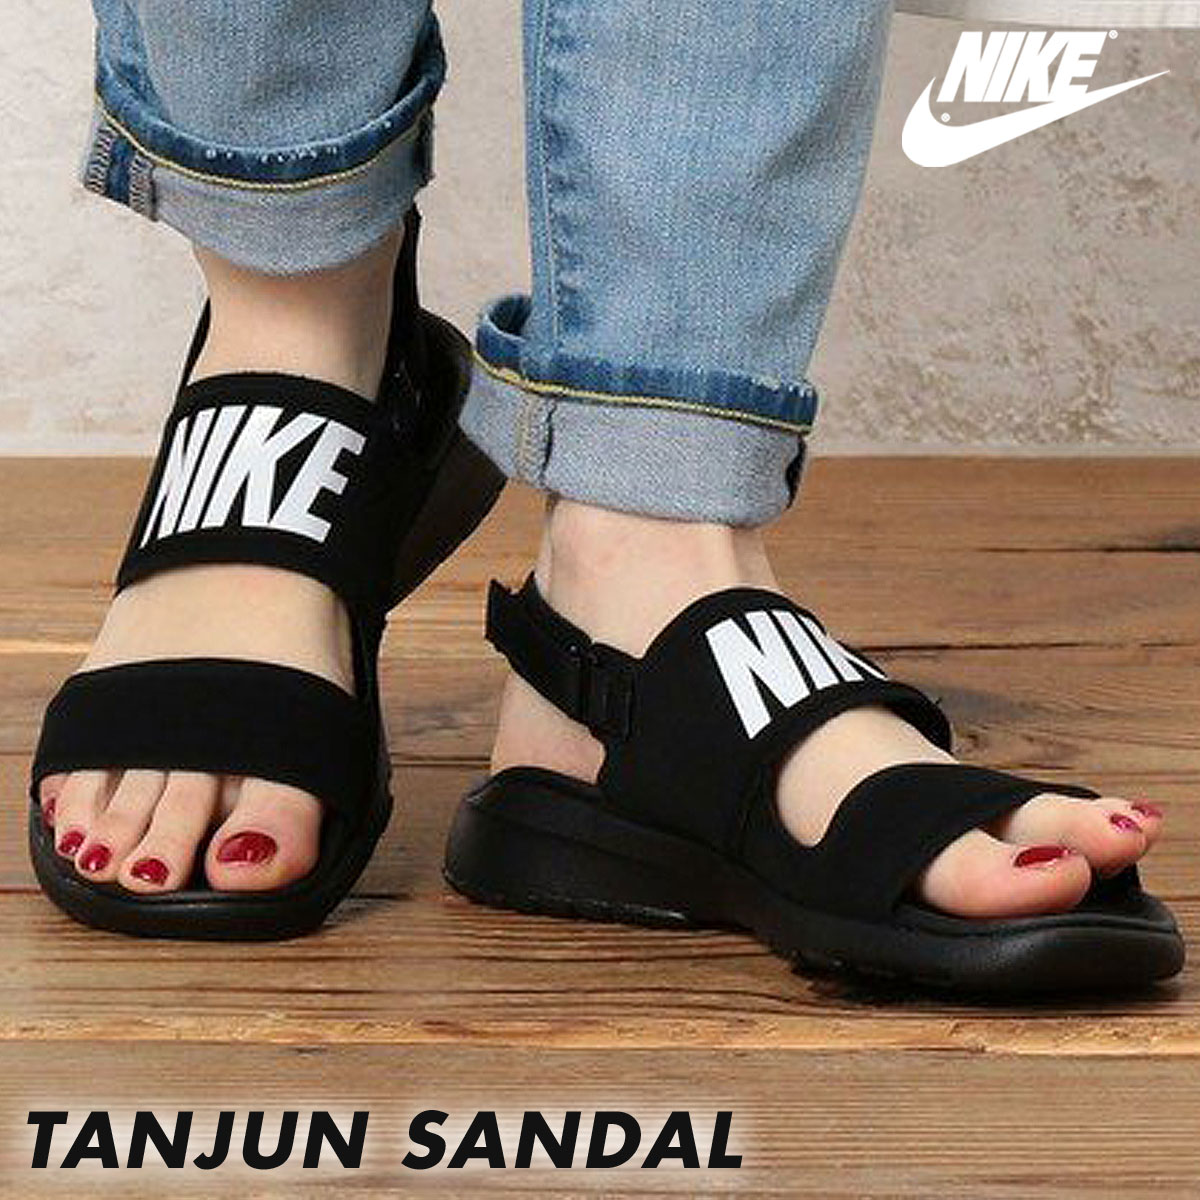 nike one strap sandal